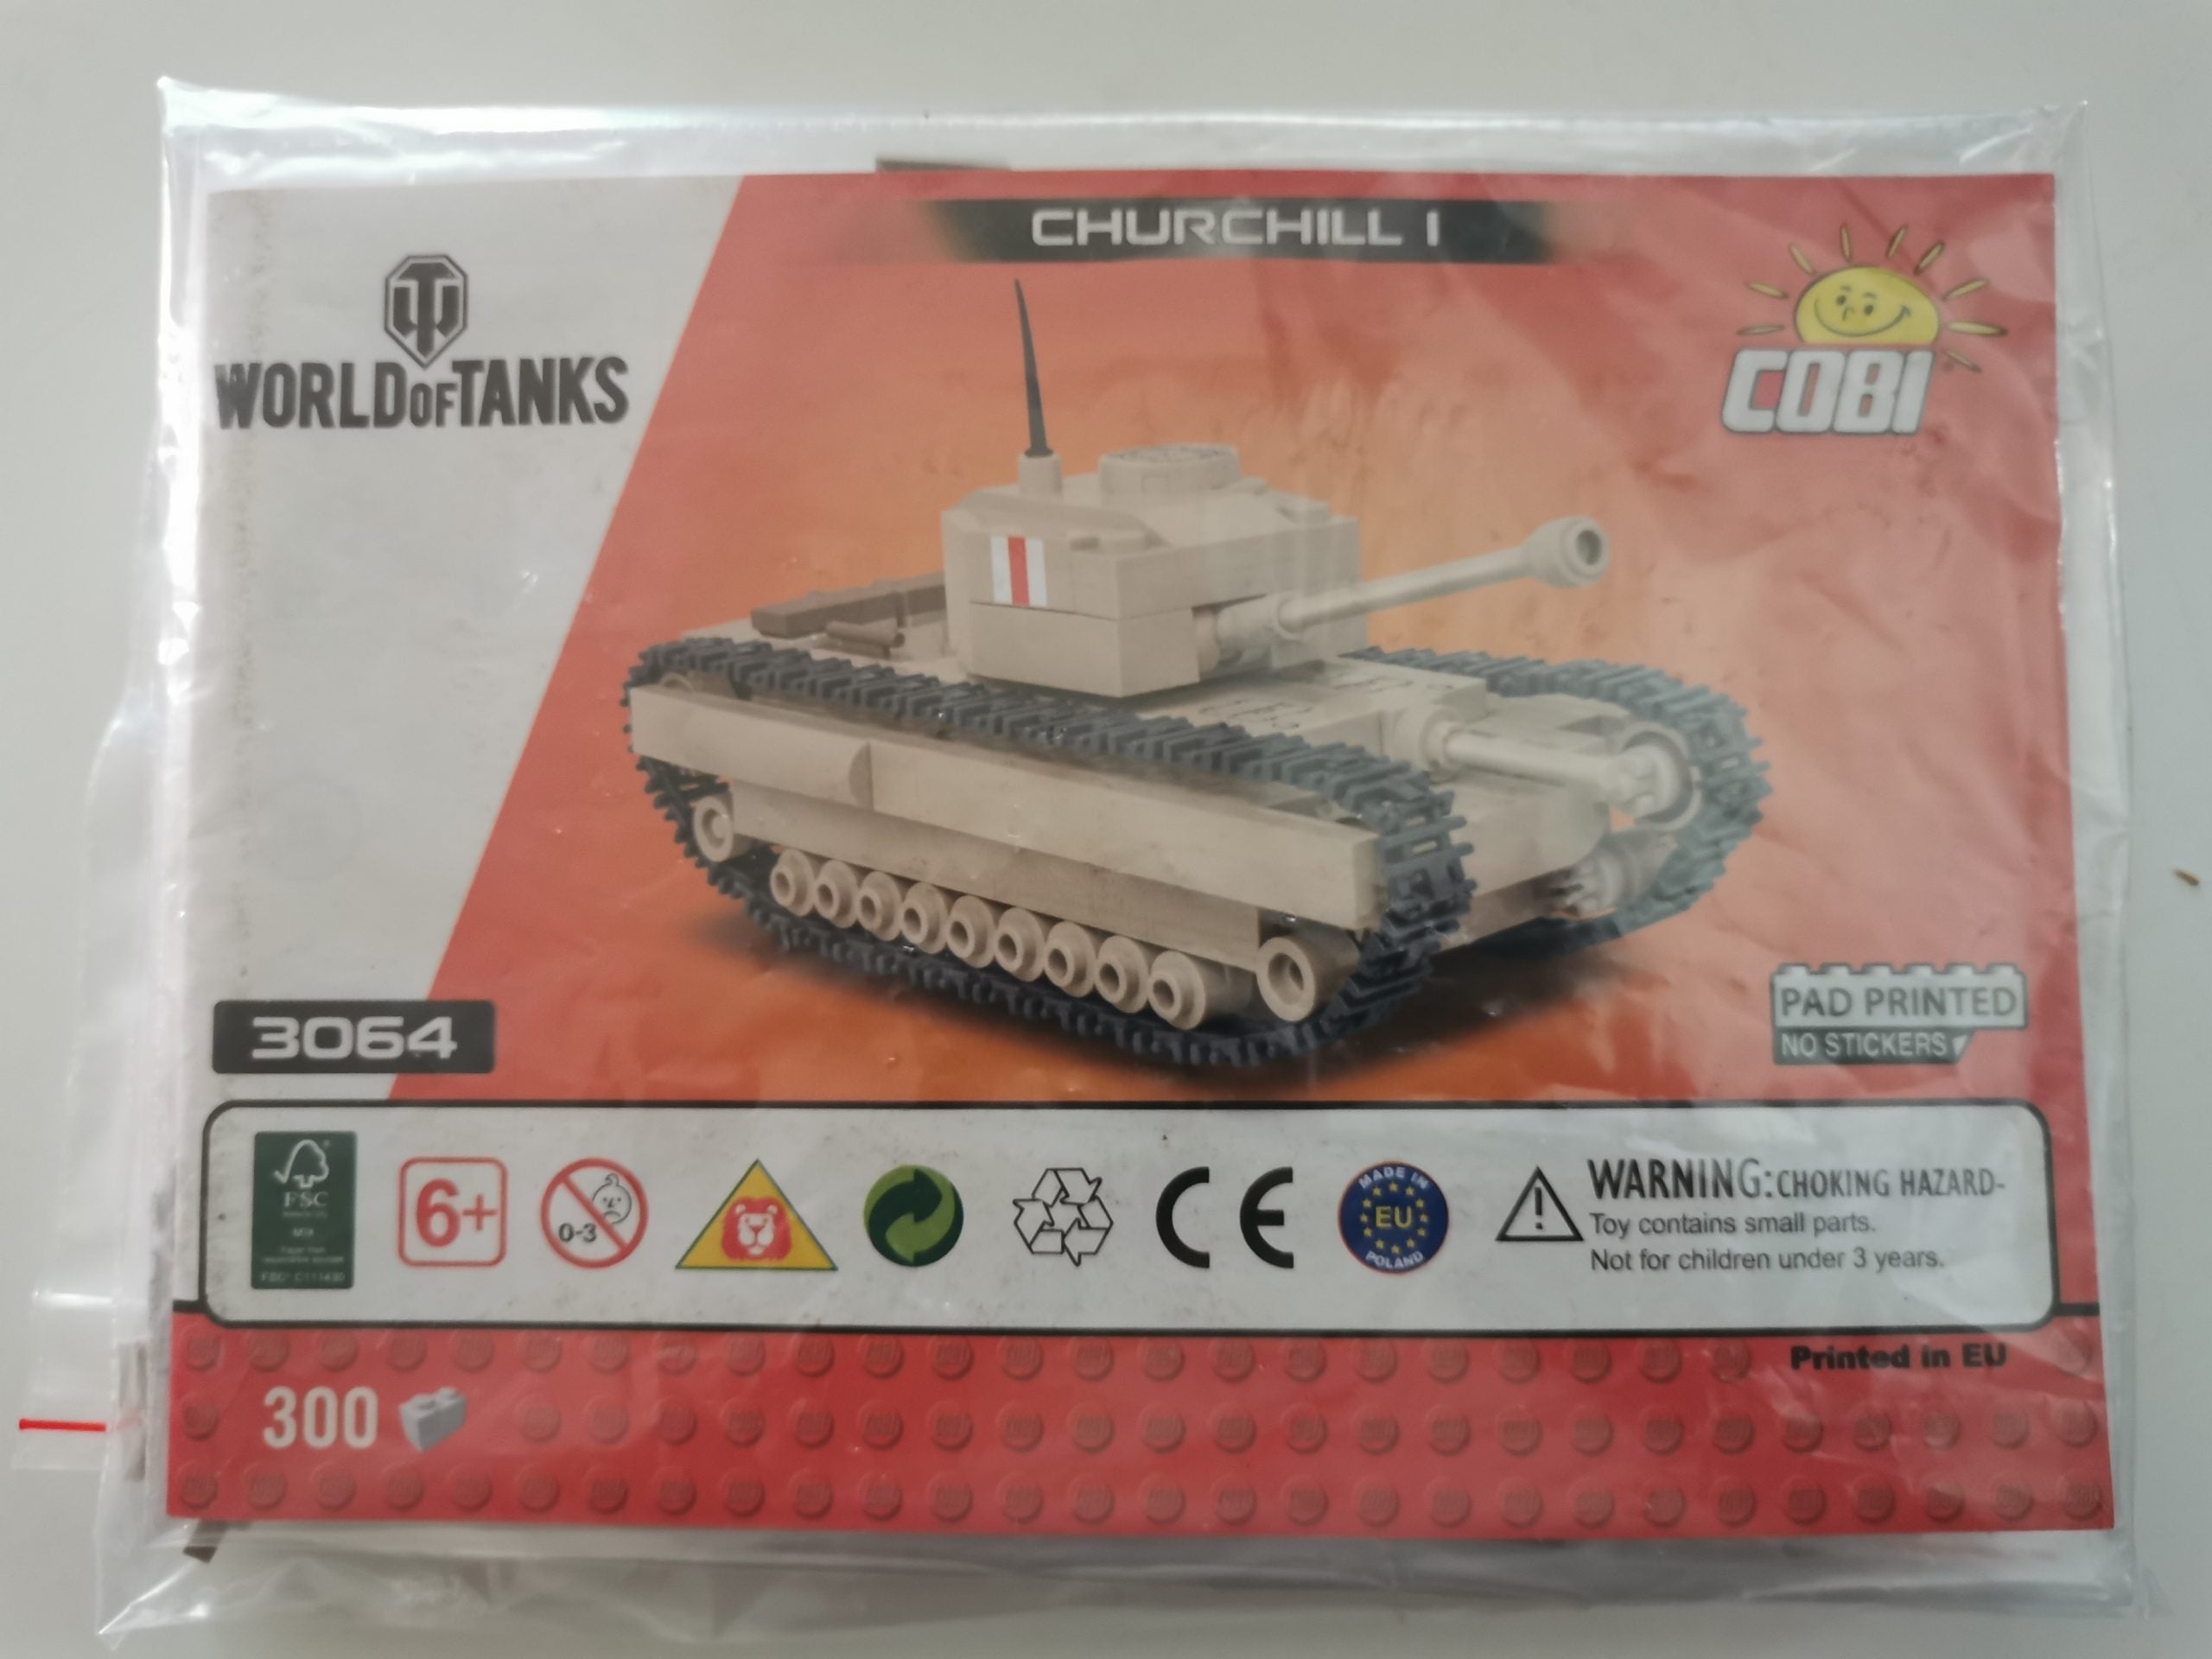 Cobi 3064 Churchill I (1:48) (World of Tanks) used